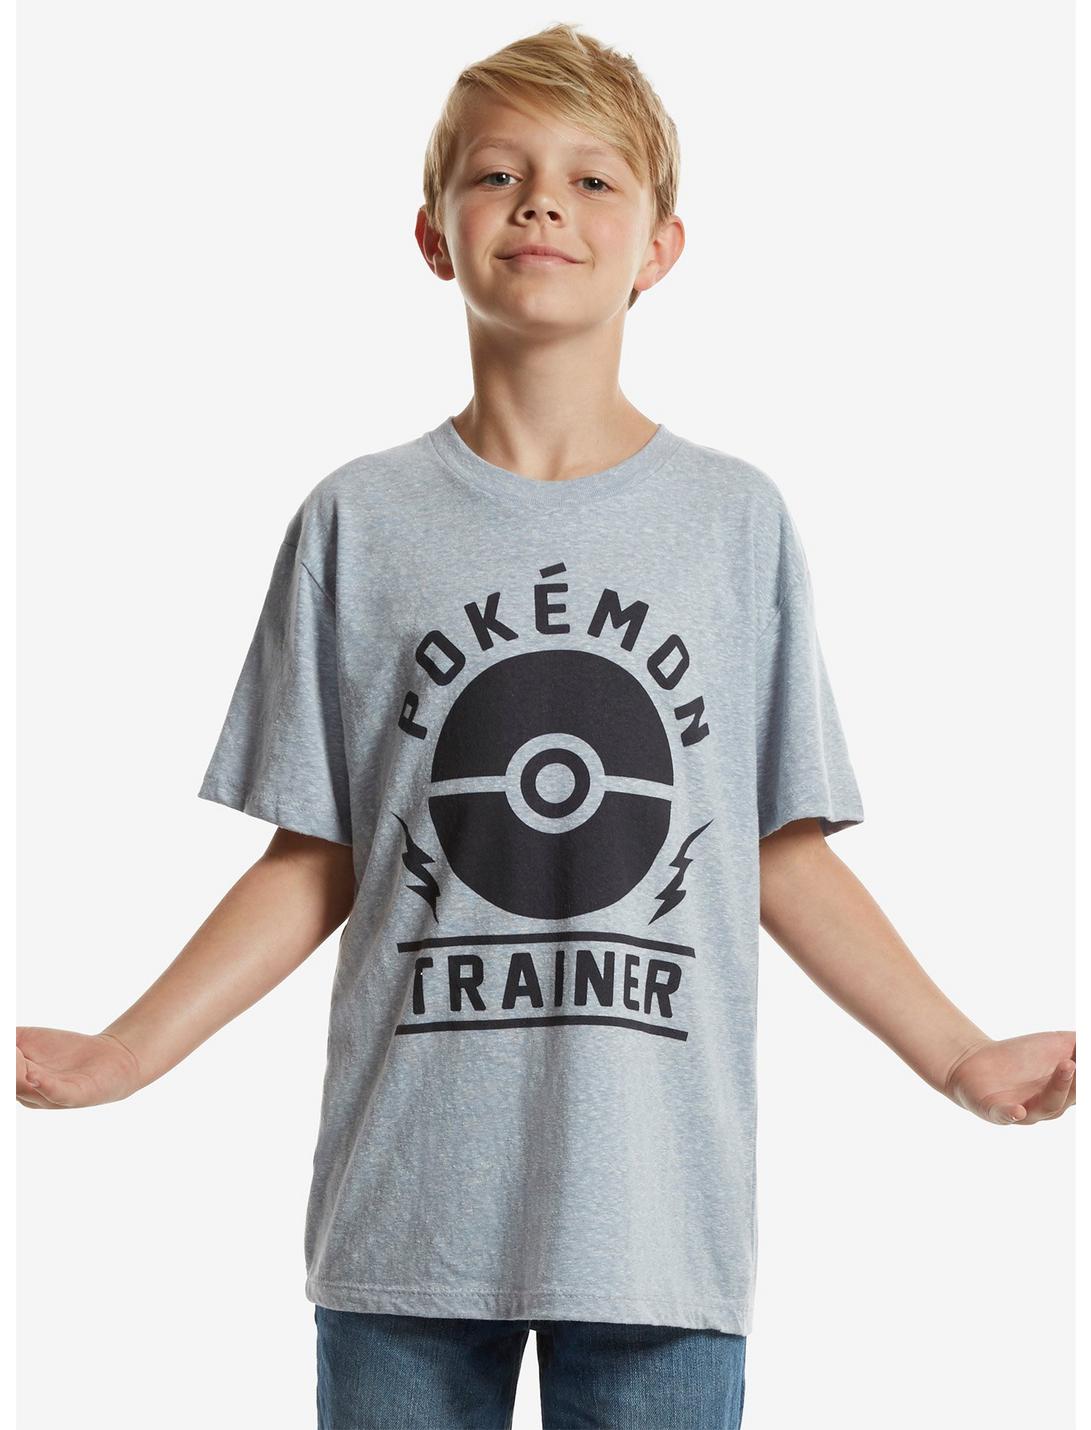 Pokémon Trainer Youth Tee, GREY, hi-res